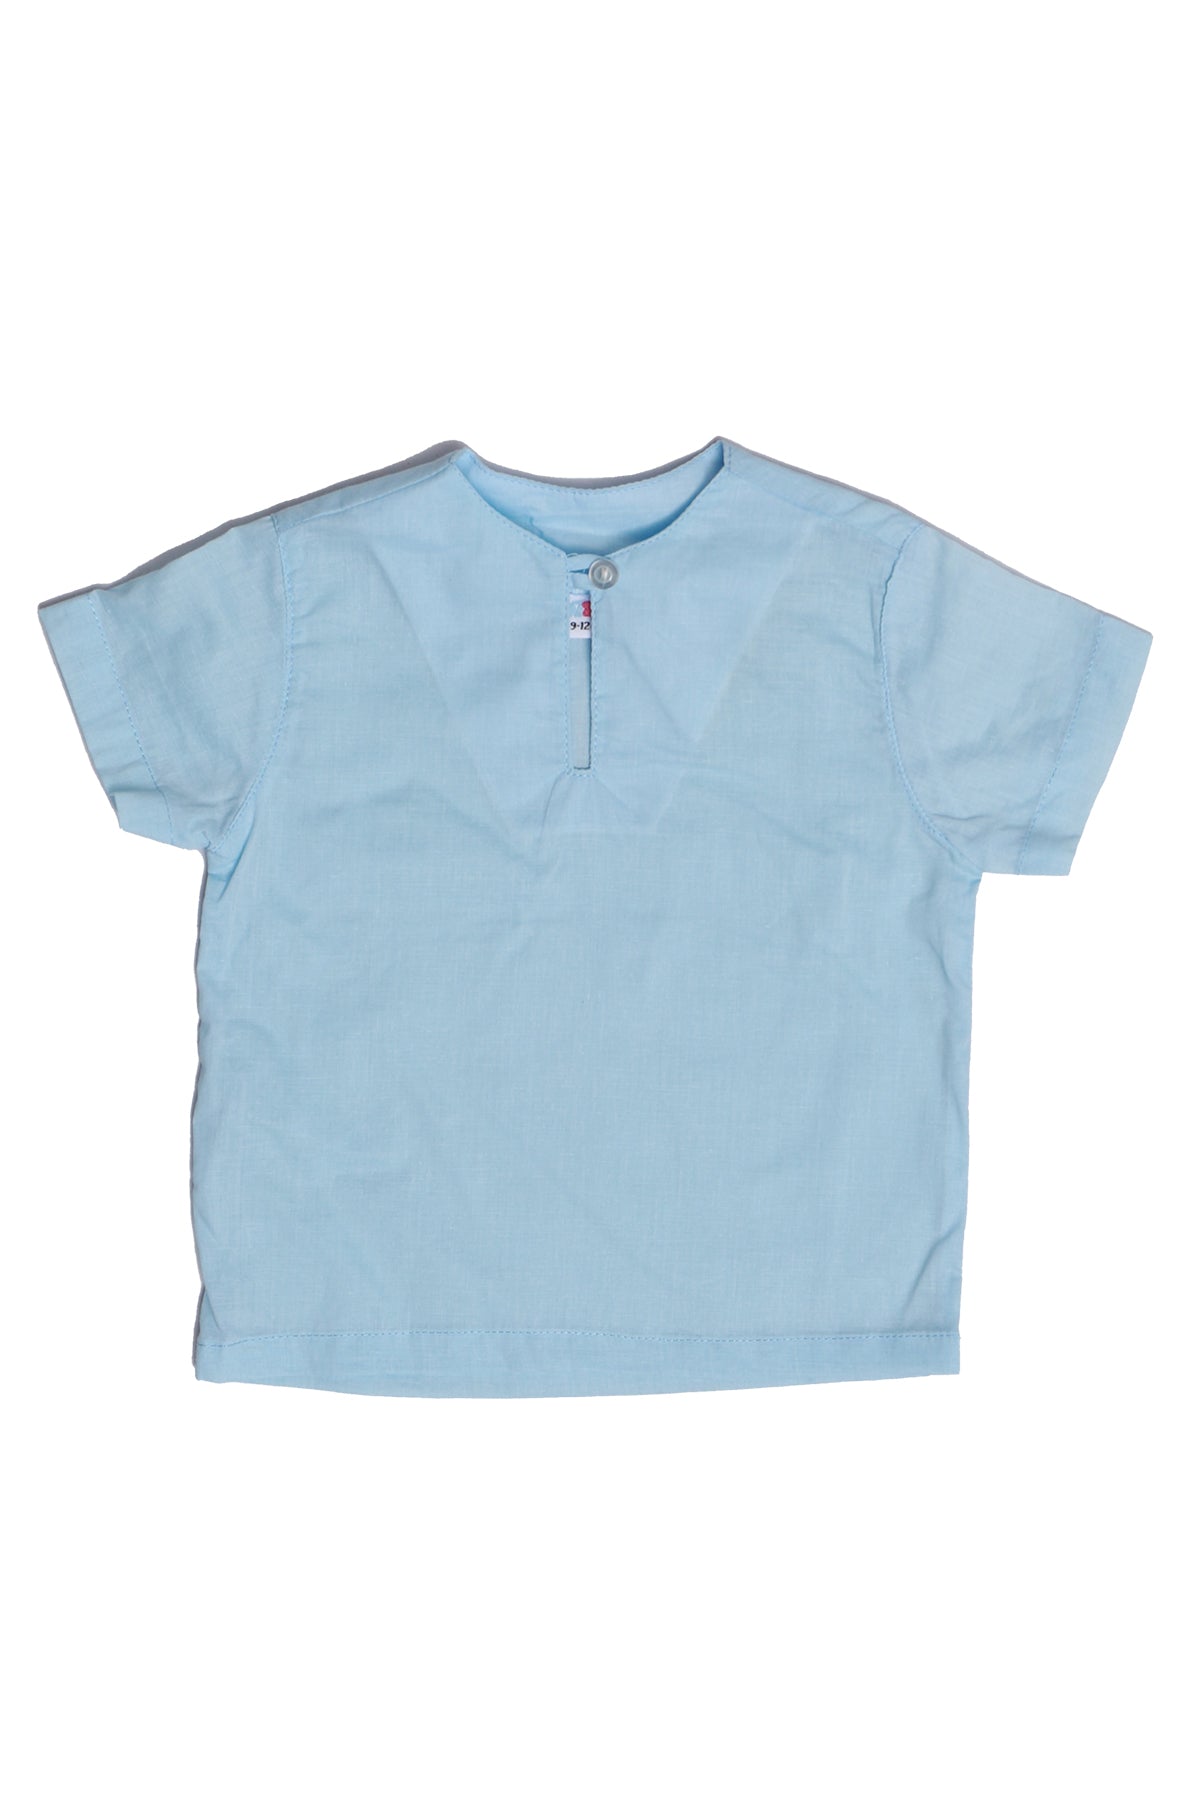 Ozone Baby Boys Short Sleeve Casual Shirt